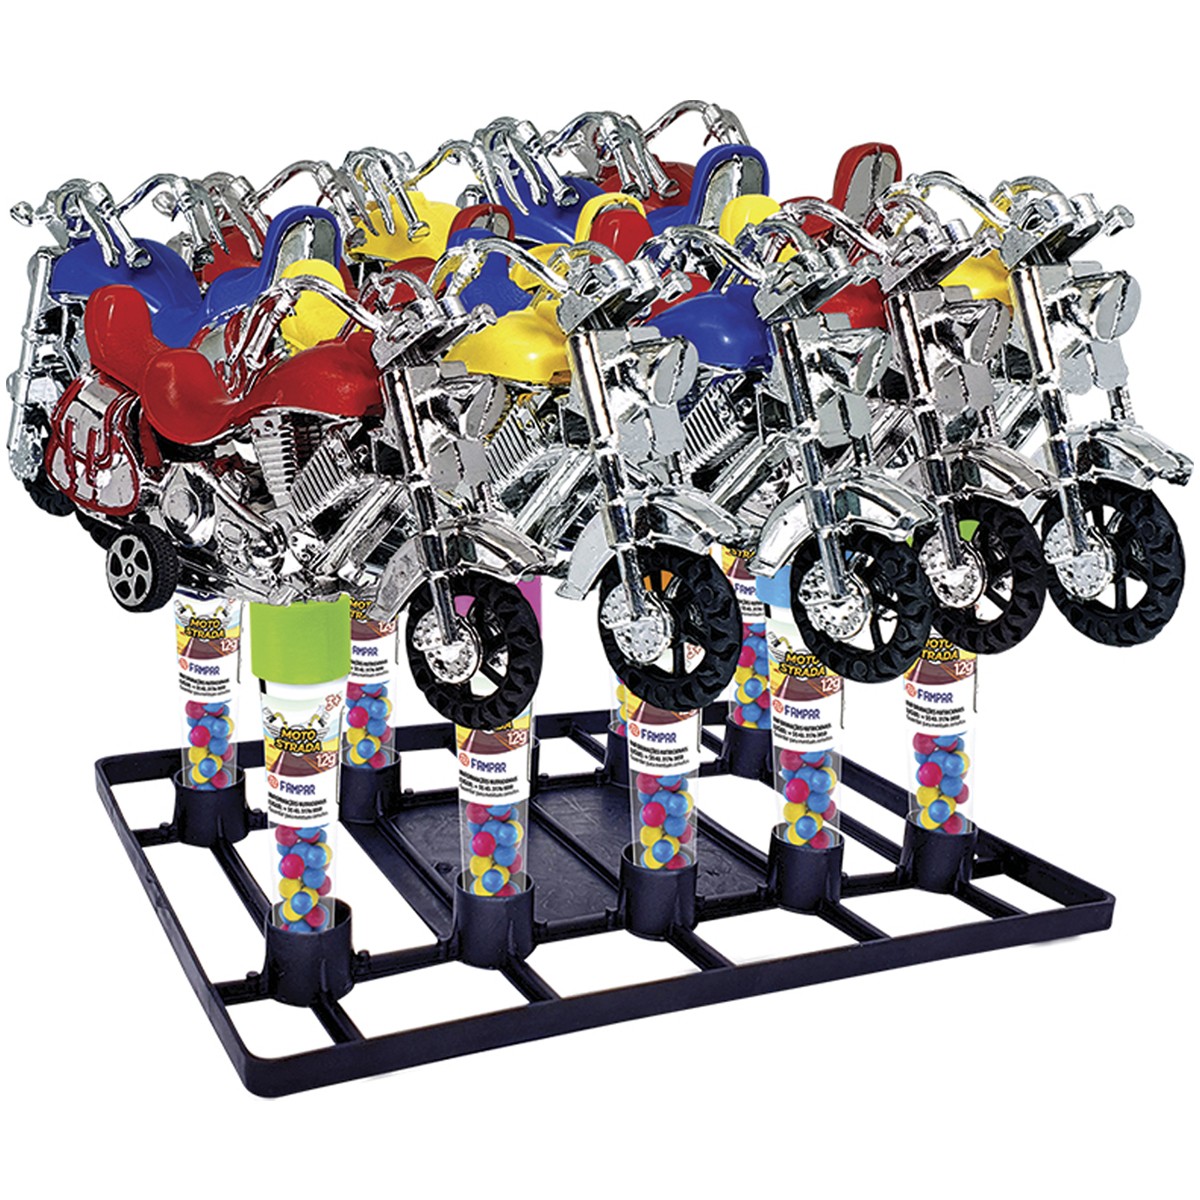 Confeito moto strada display c/ 10 unidades-27058054-74086